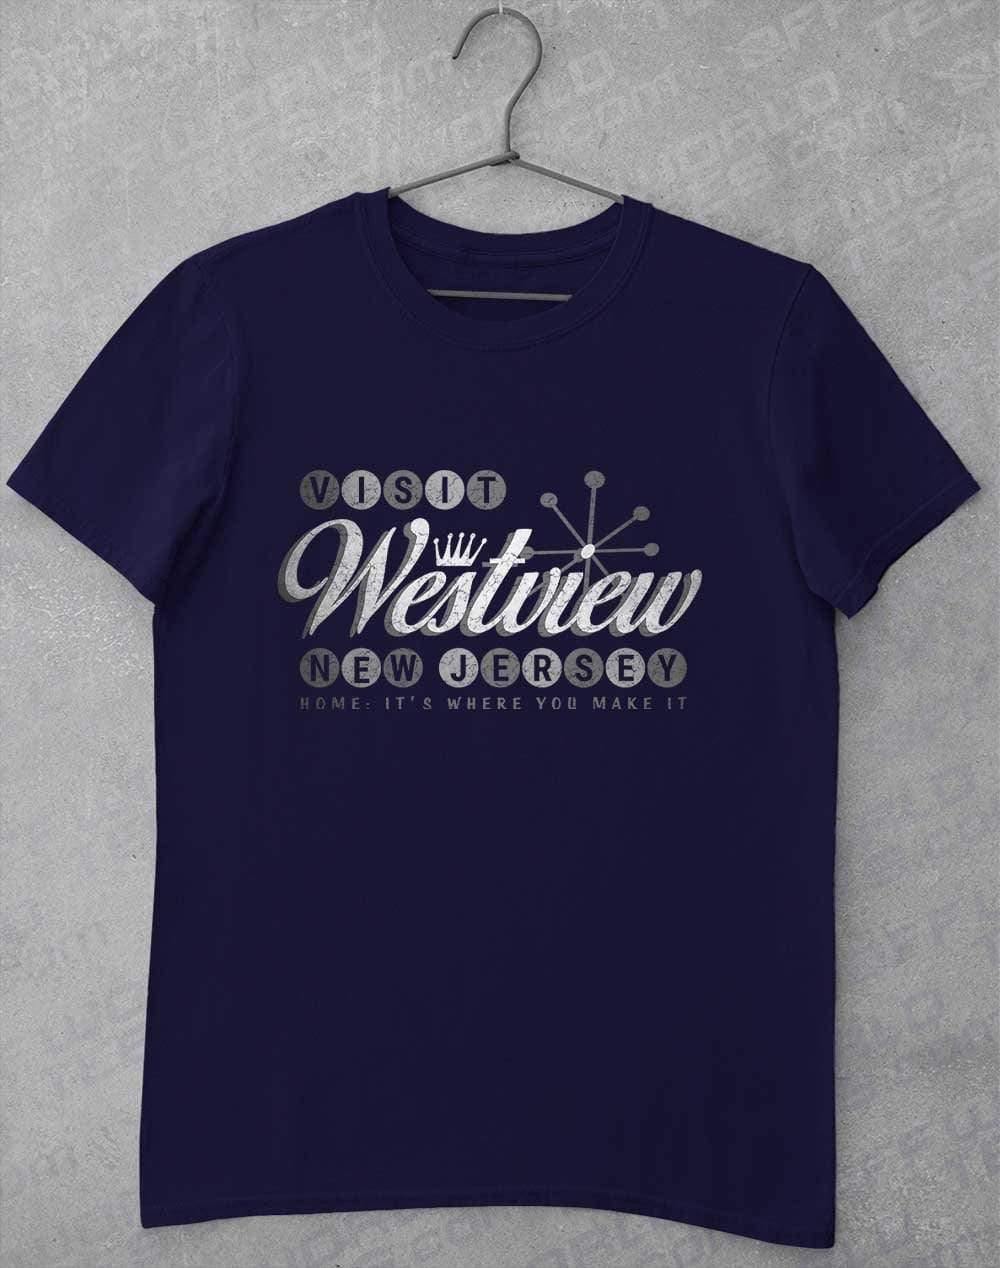 Visit Westview New Jersey T-Shirt S / Navy  - Off World Tees